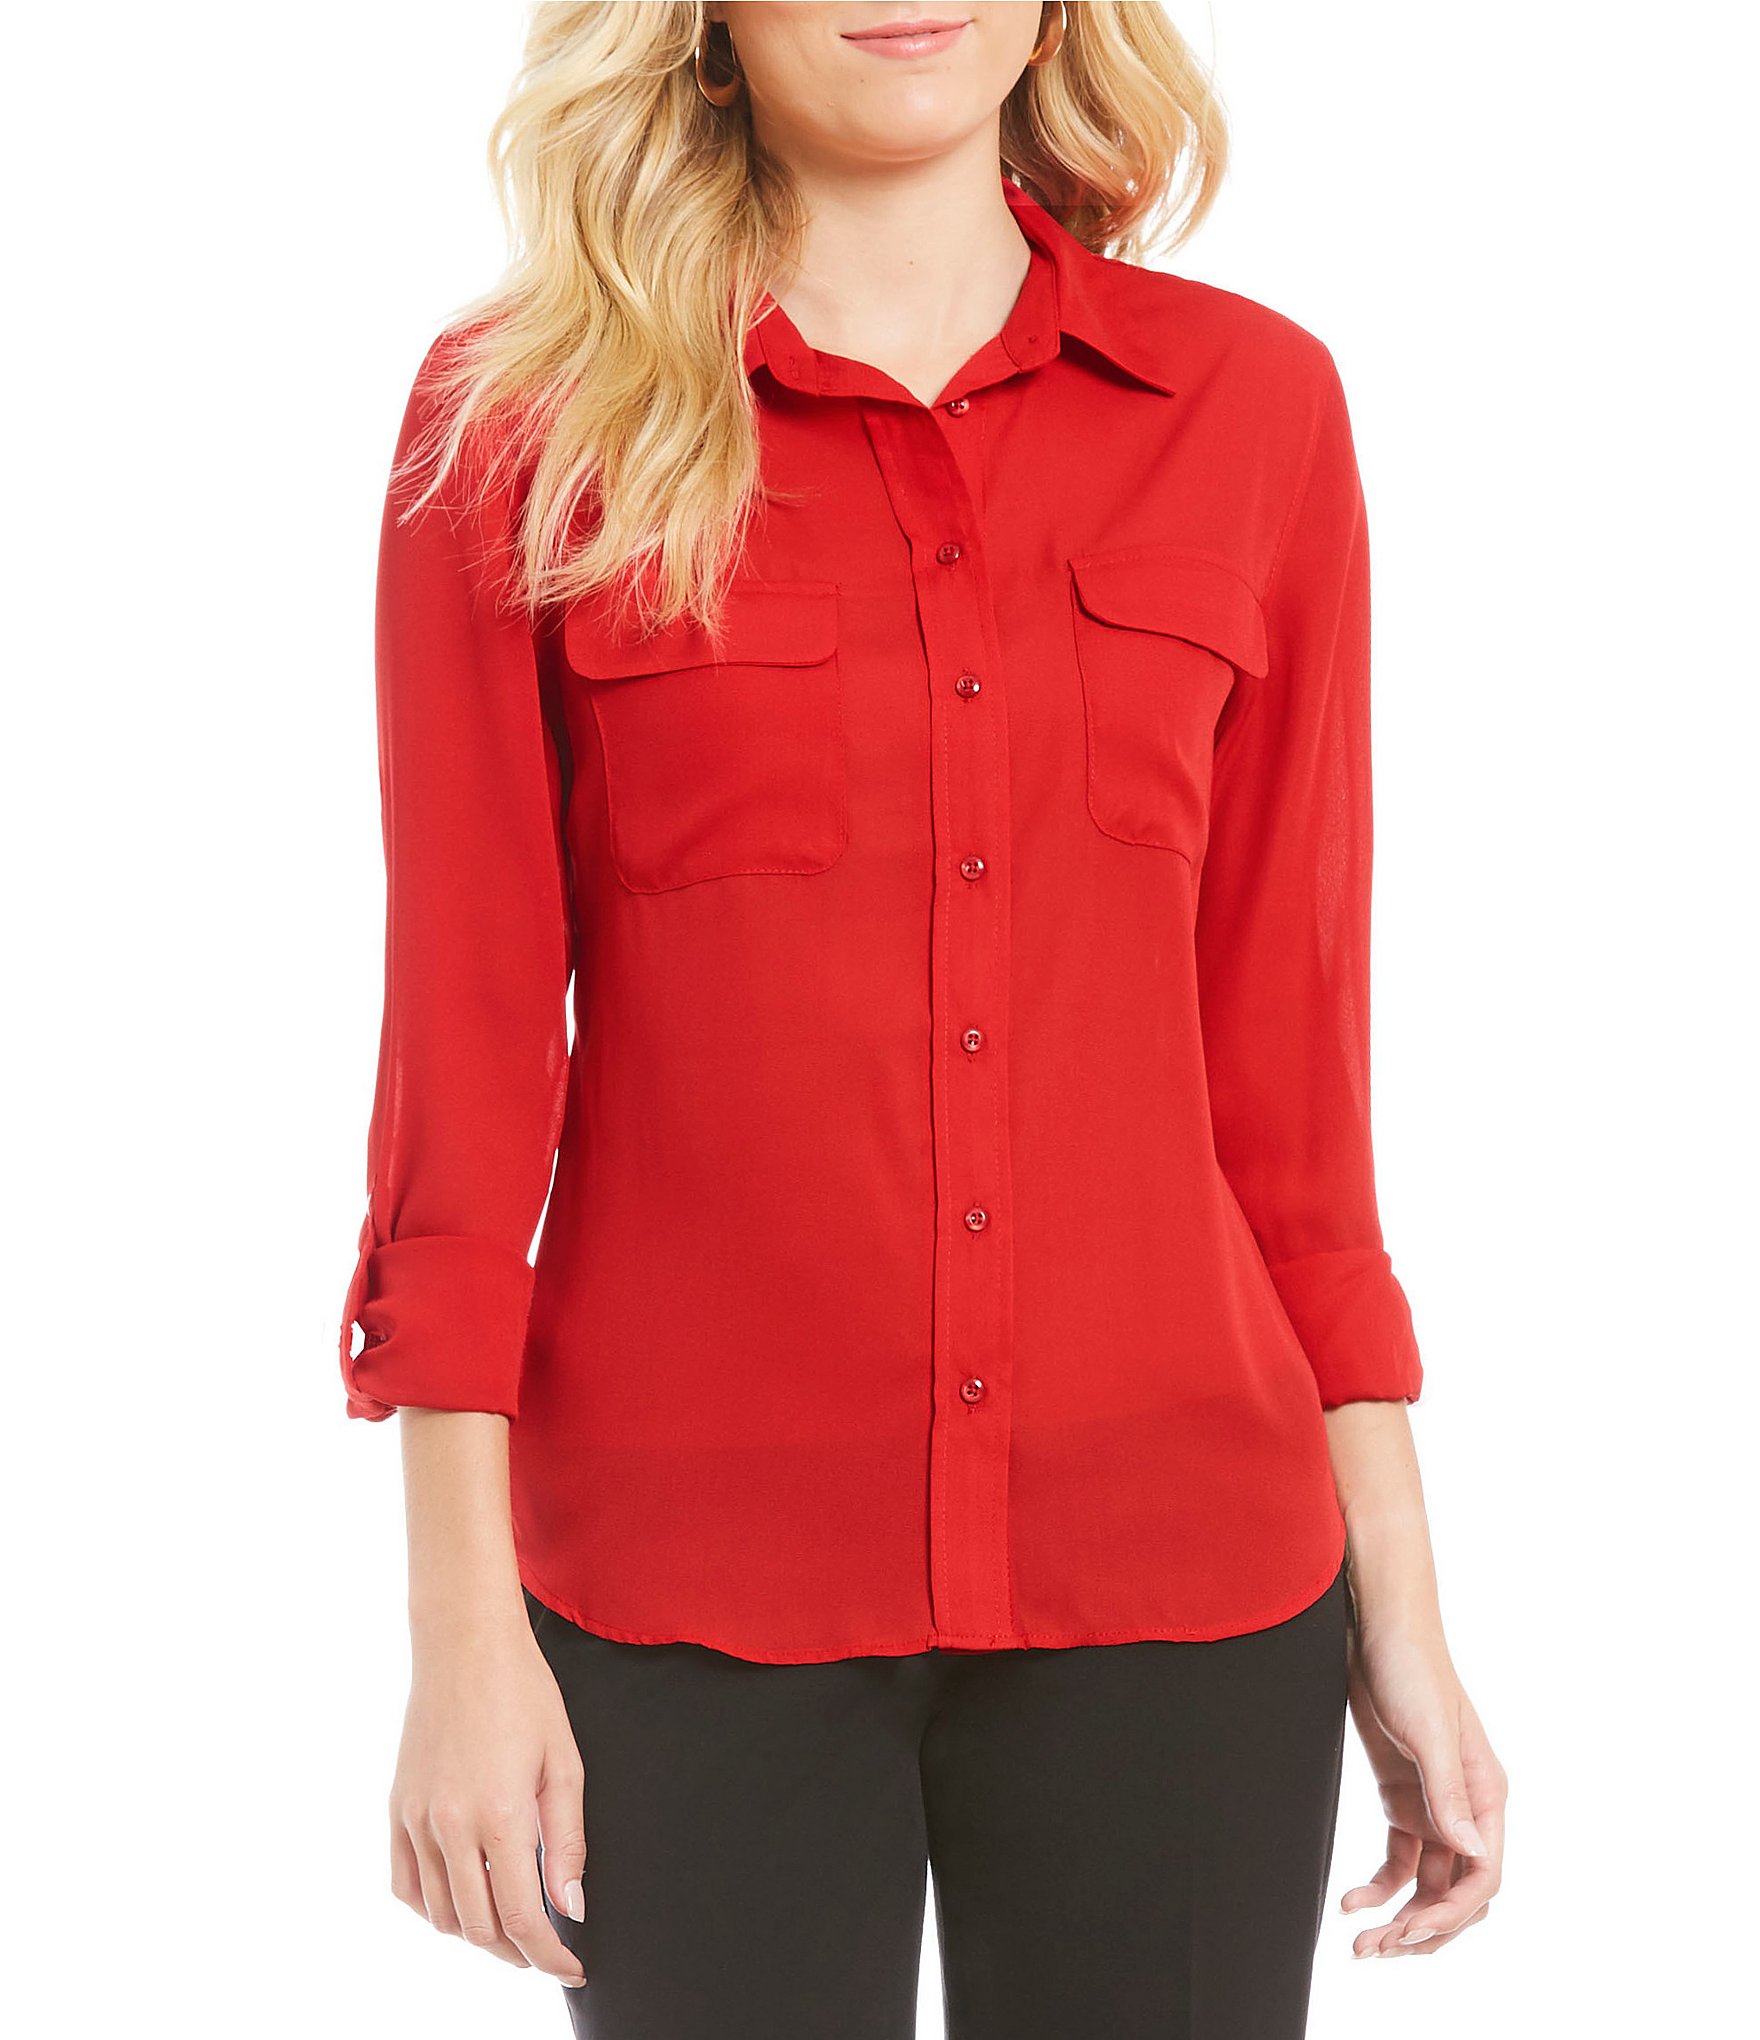 red blouse red womenu0027s casual u0026 dressy tops u0026 blouses | dillards syvkcit